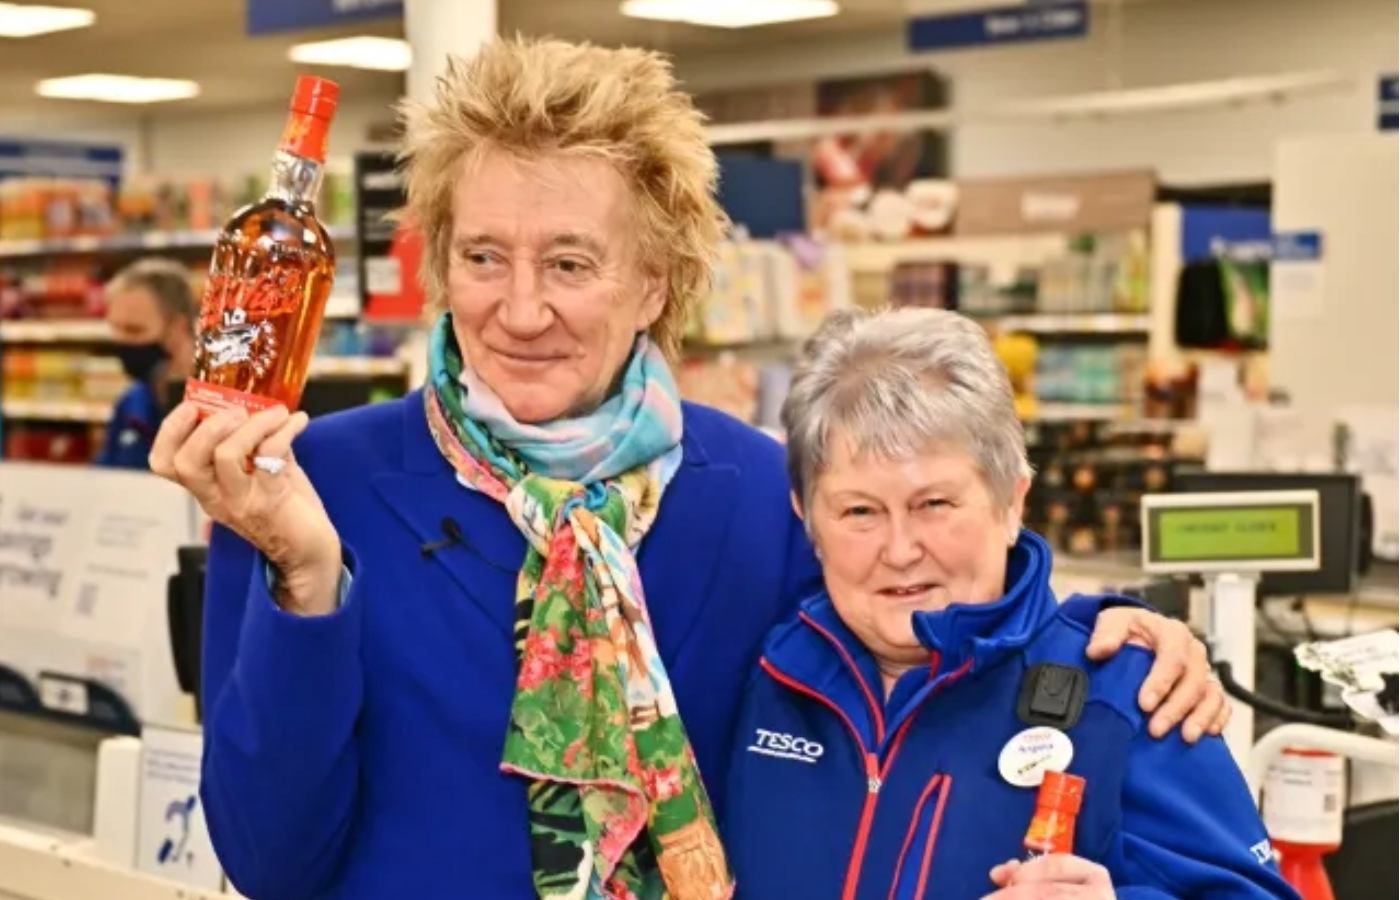 The Scottish rocker shocked staff at a Tesco store in Bishop's Stortford. Photo: Getty Images.